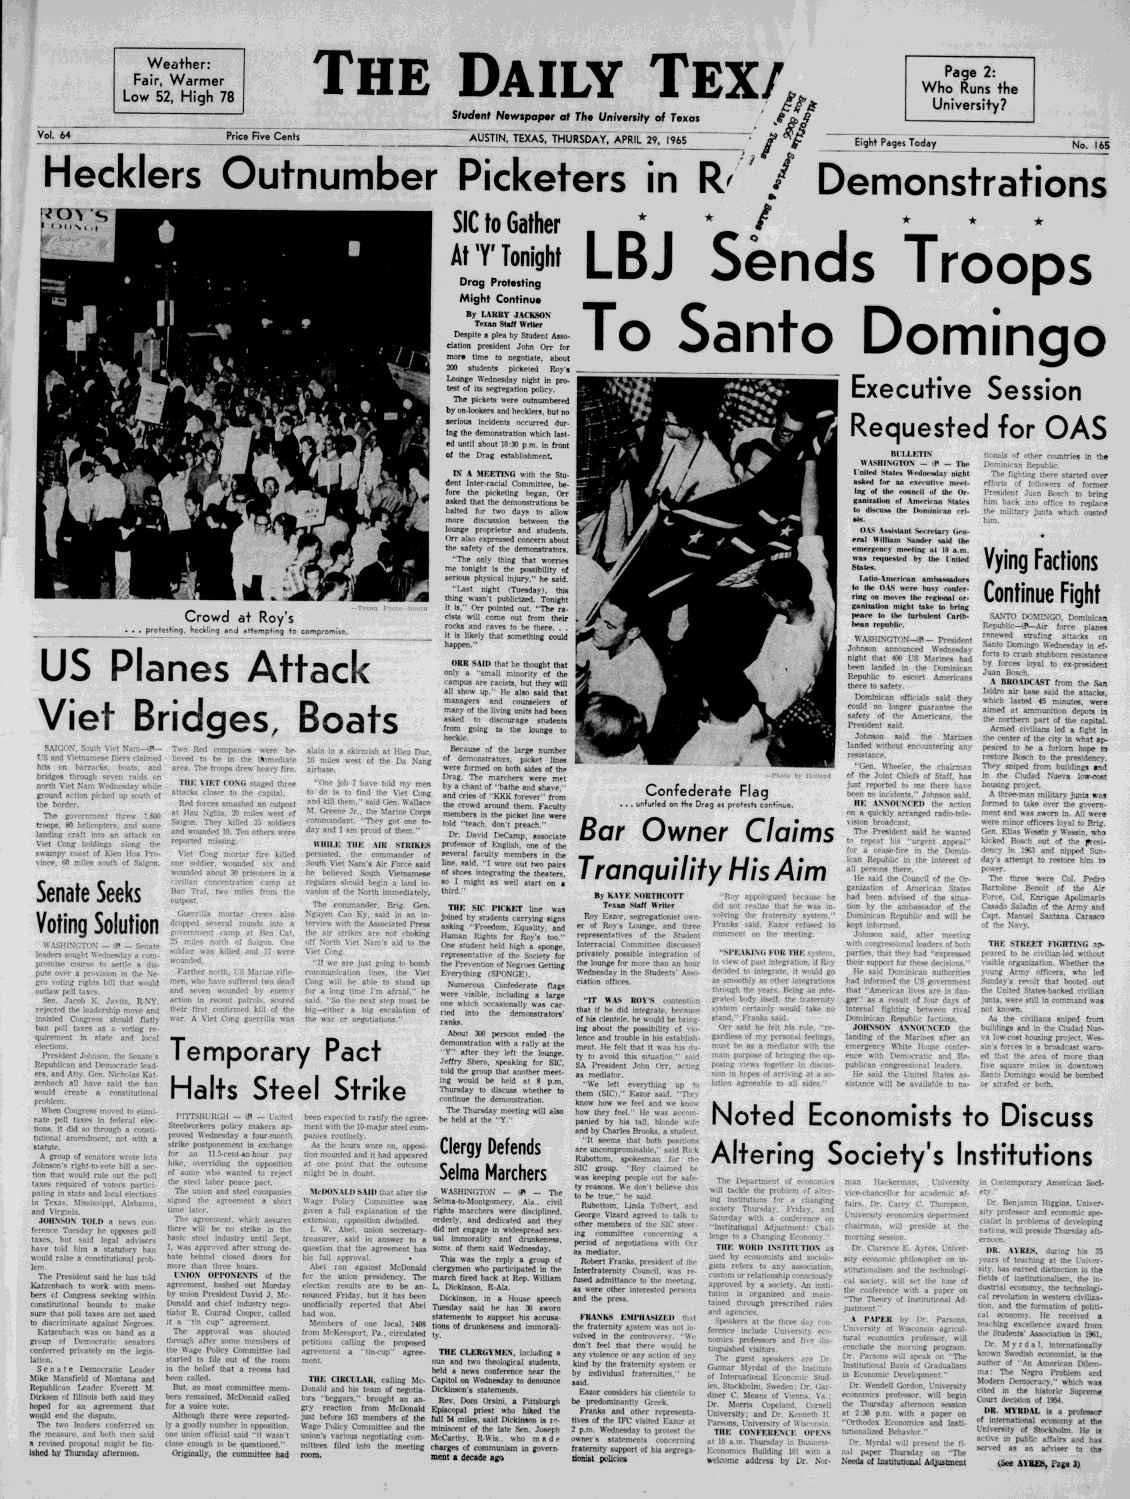 Austin Daily Texan, April 29, 1965